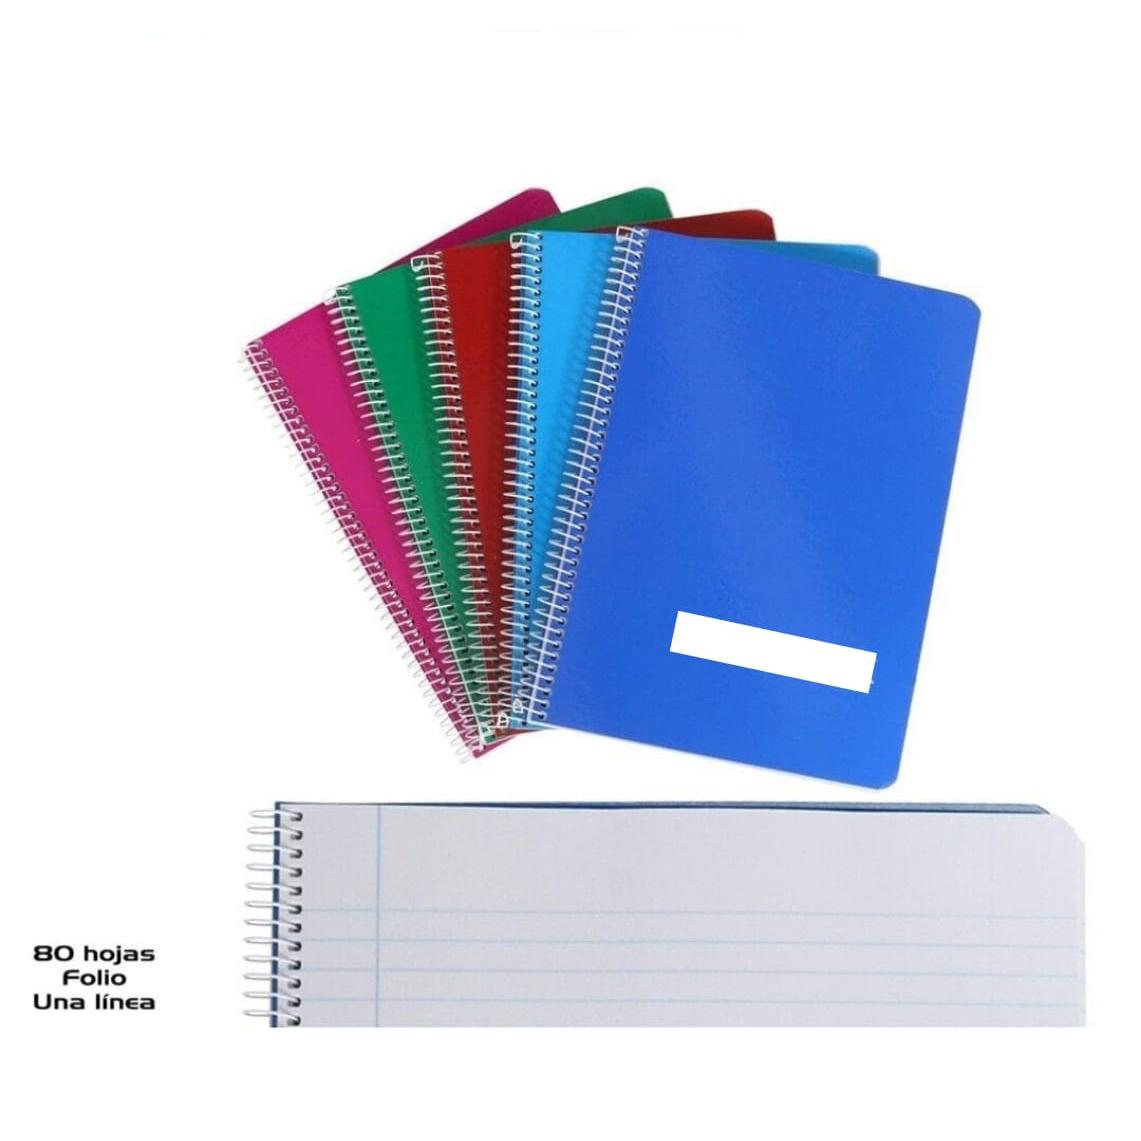 NAKLOE - Libretas A4 - Cuadernos A4 - Libreta de 1 linea - 80 hojas - Bloc de notas y cuadernos - Libreta - Cuaderno - Papelería - Color a elegir